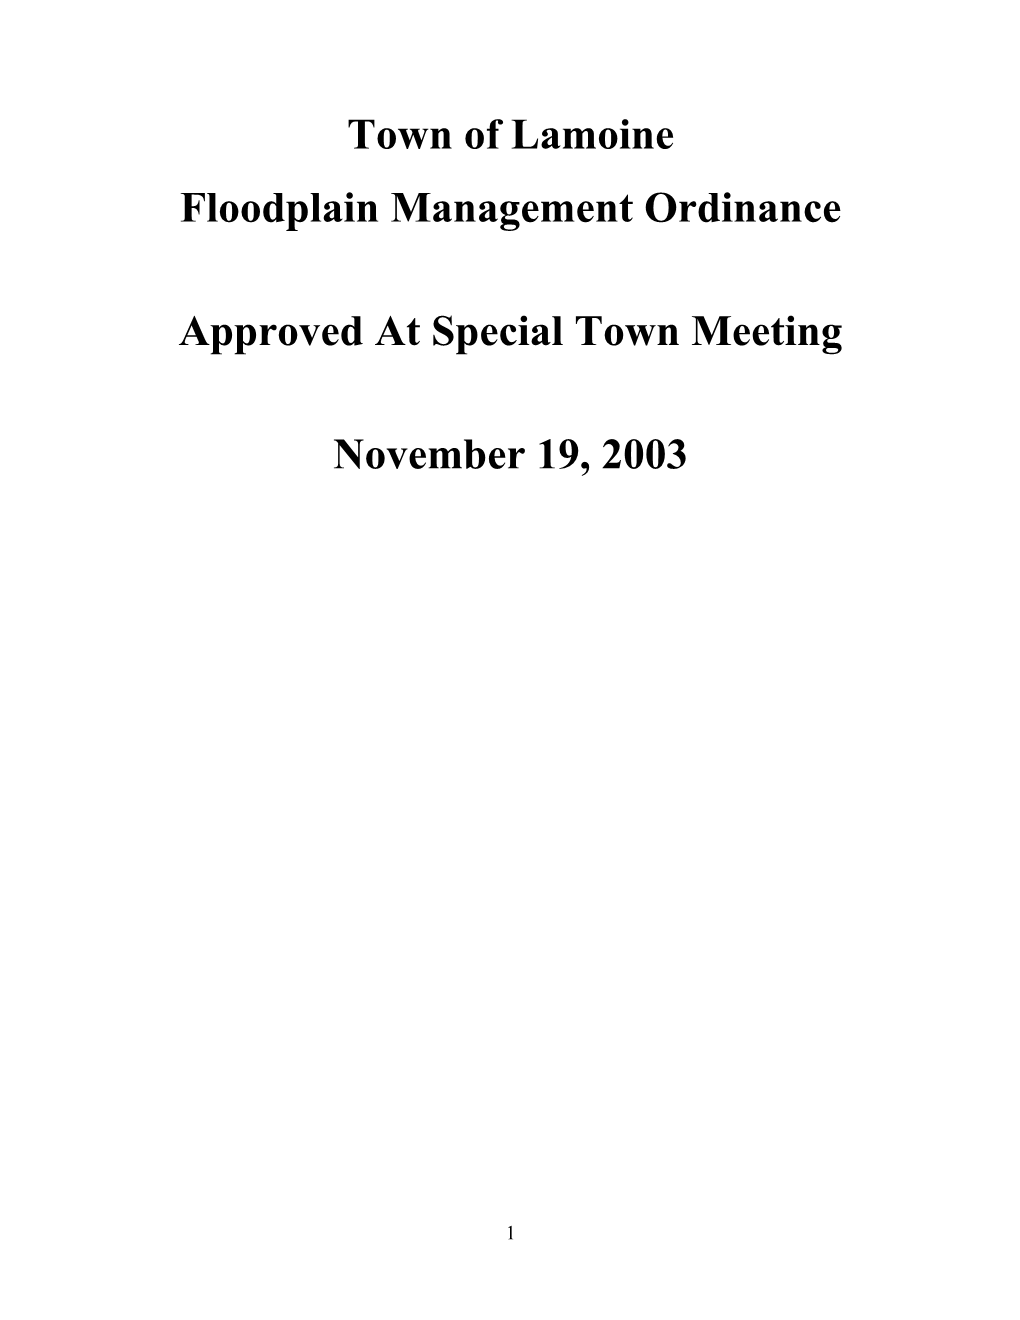 Floodplain Management Ordinance